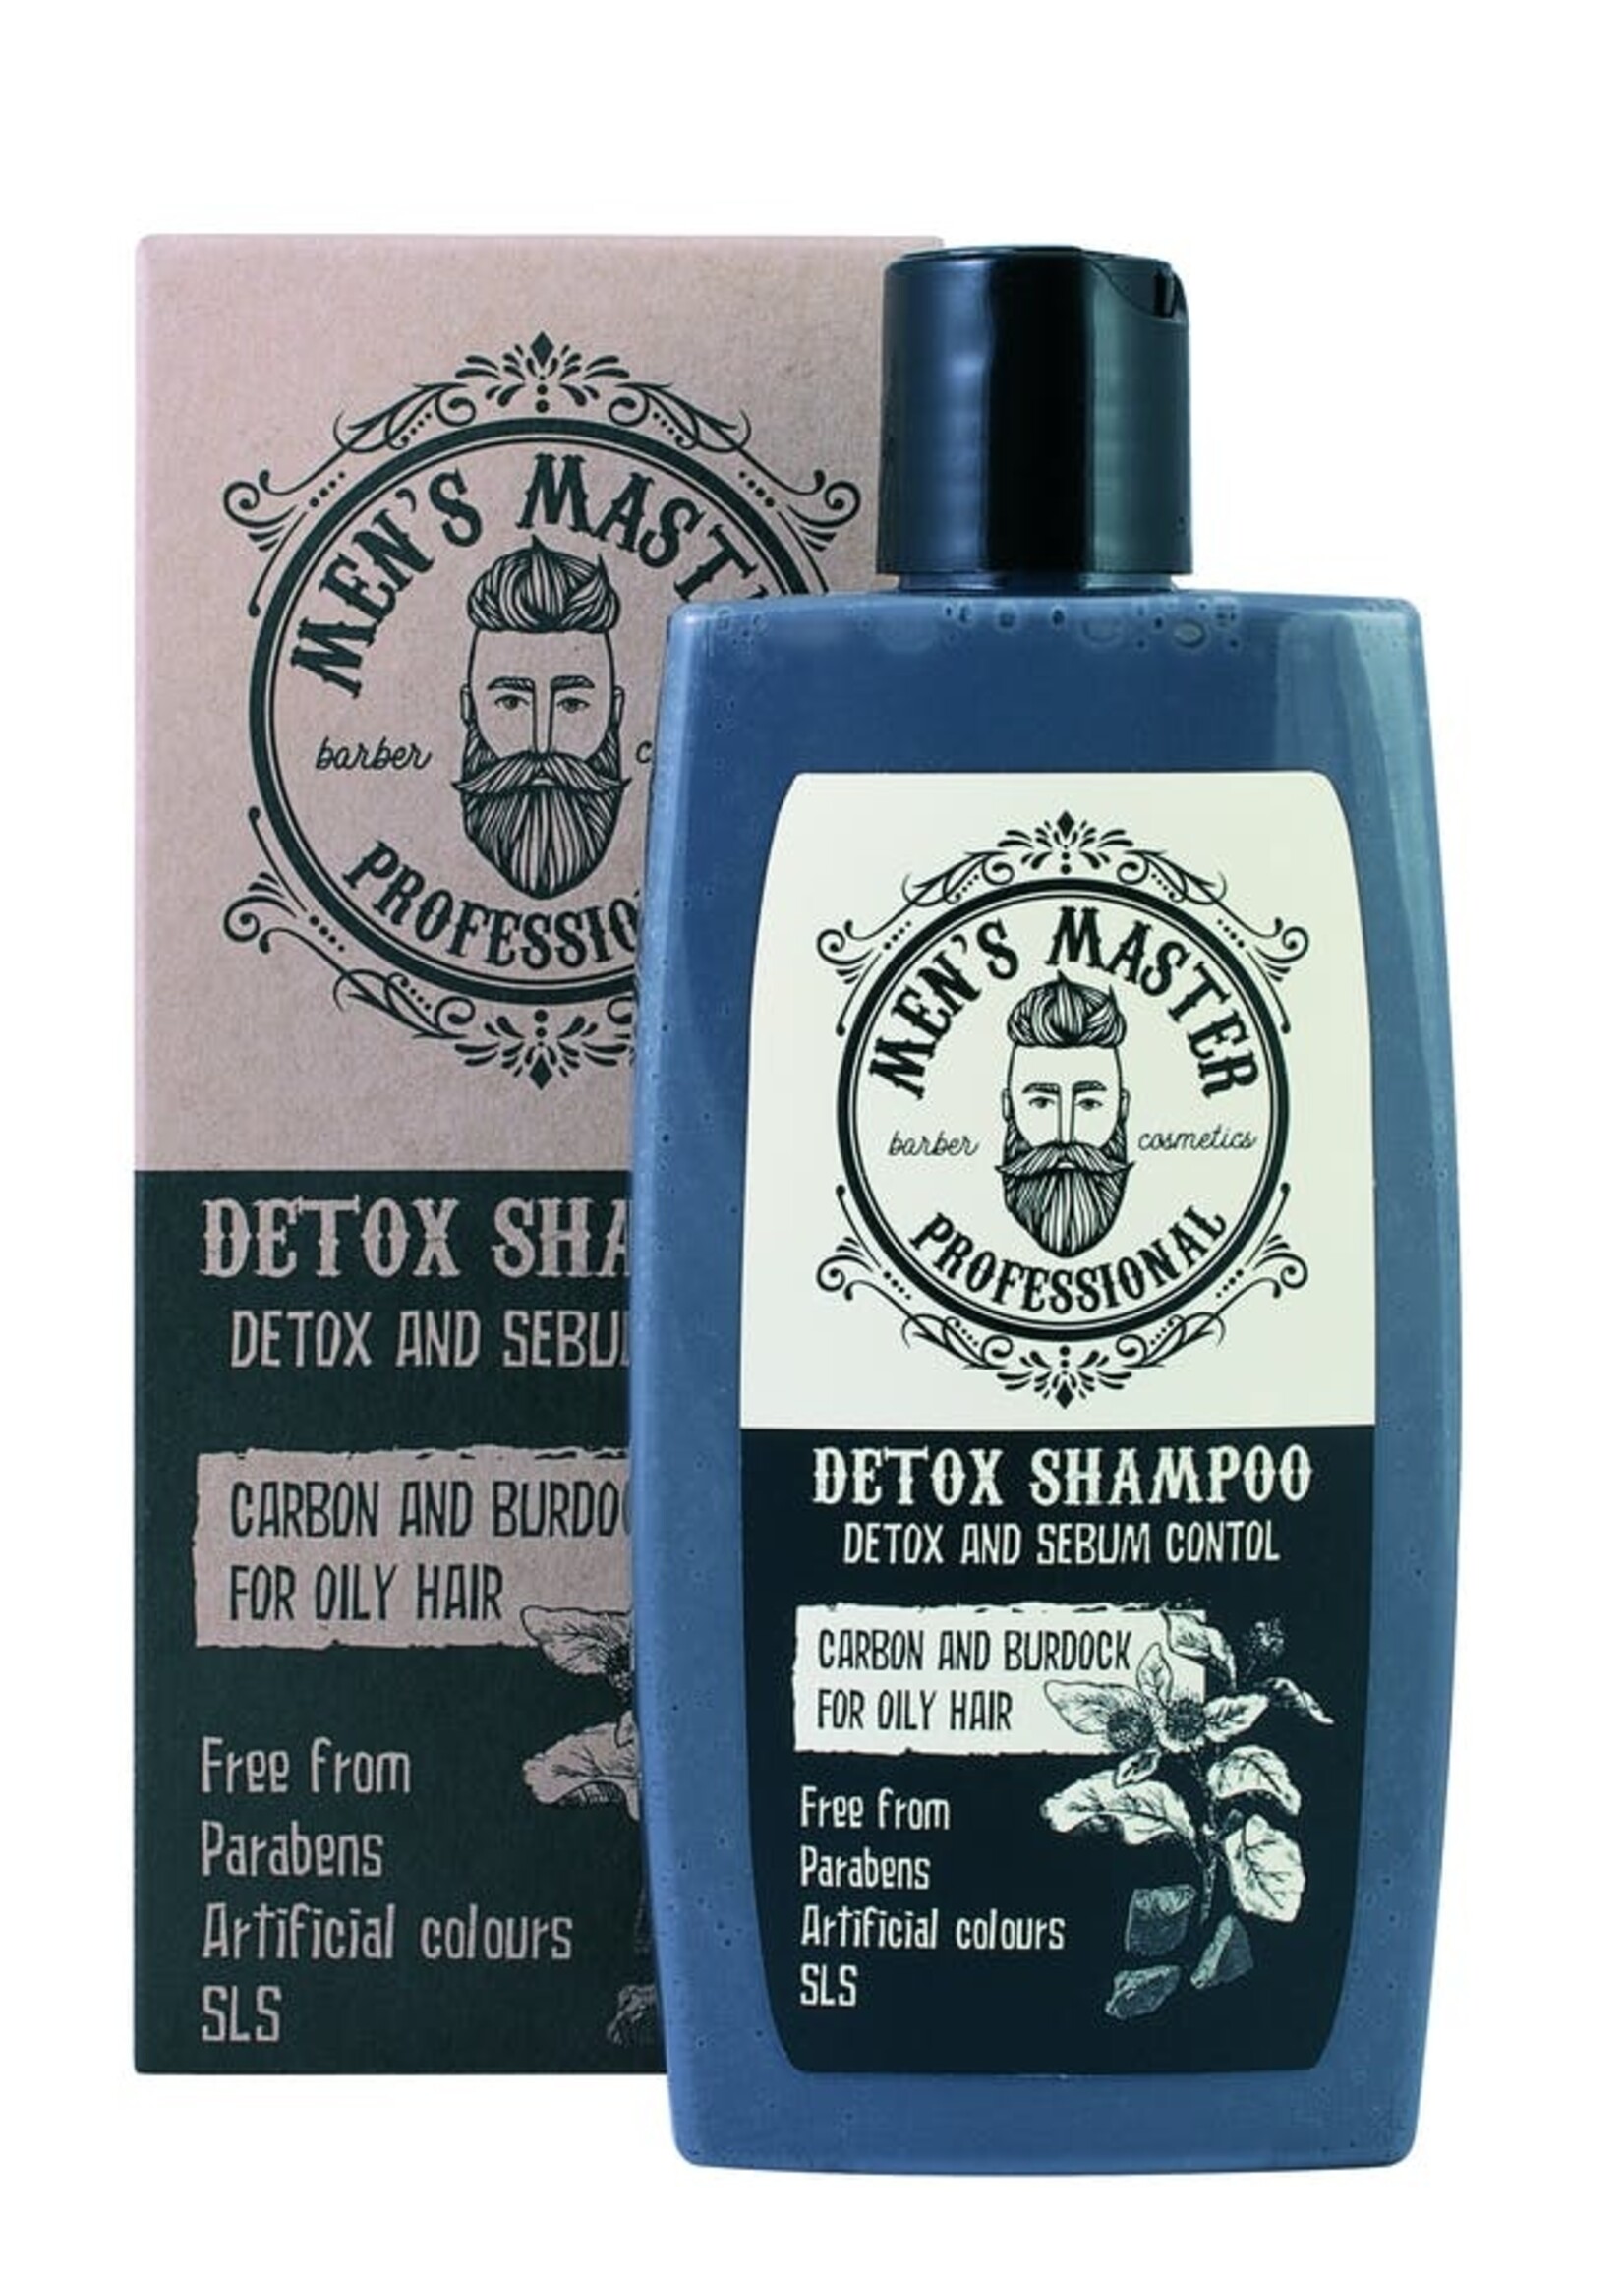 Men's Master Professional  Detox Shampoo